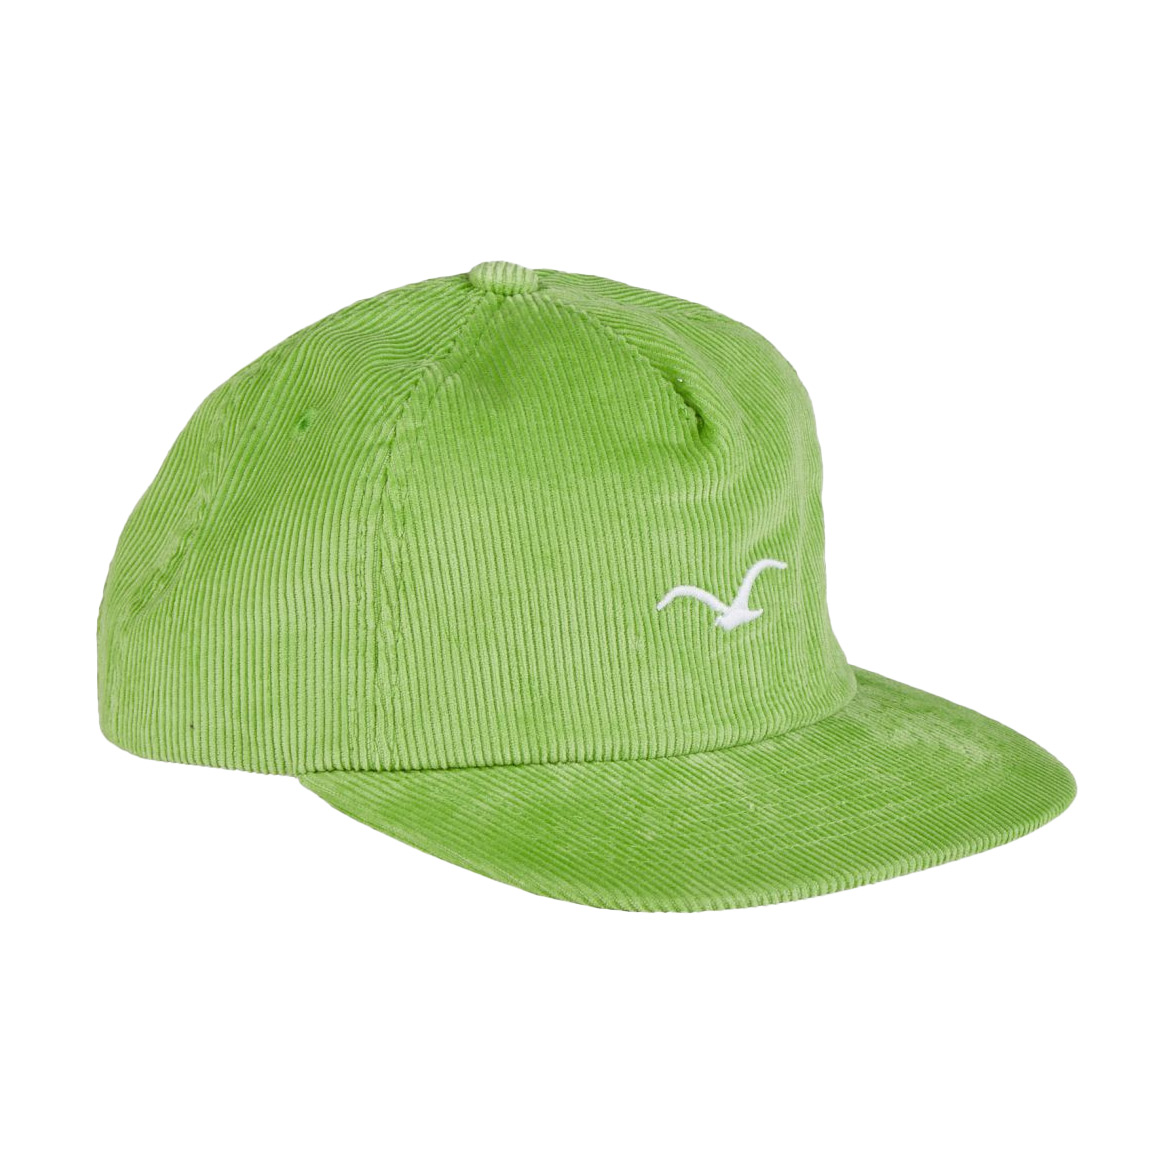 Cleptomanicx Snapback Cap Cord Möwe (nile green)